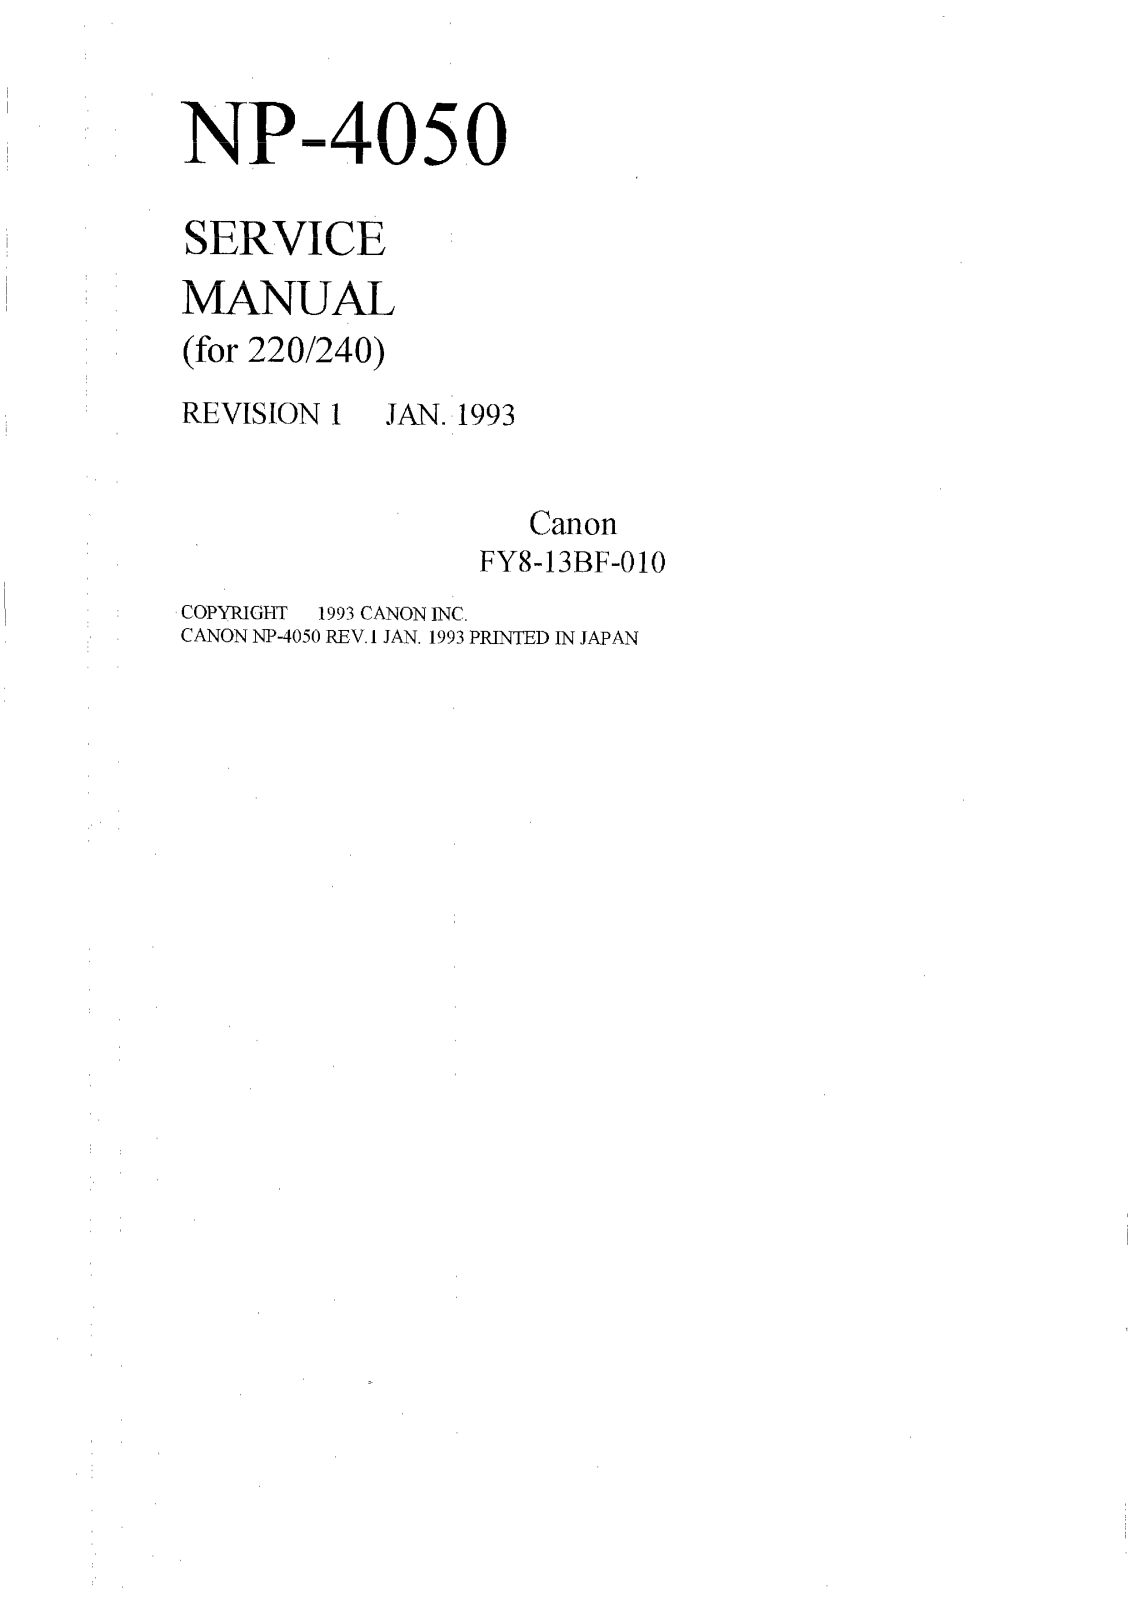 Canon Np4050 Service Manual